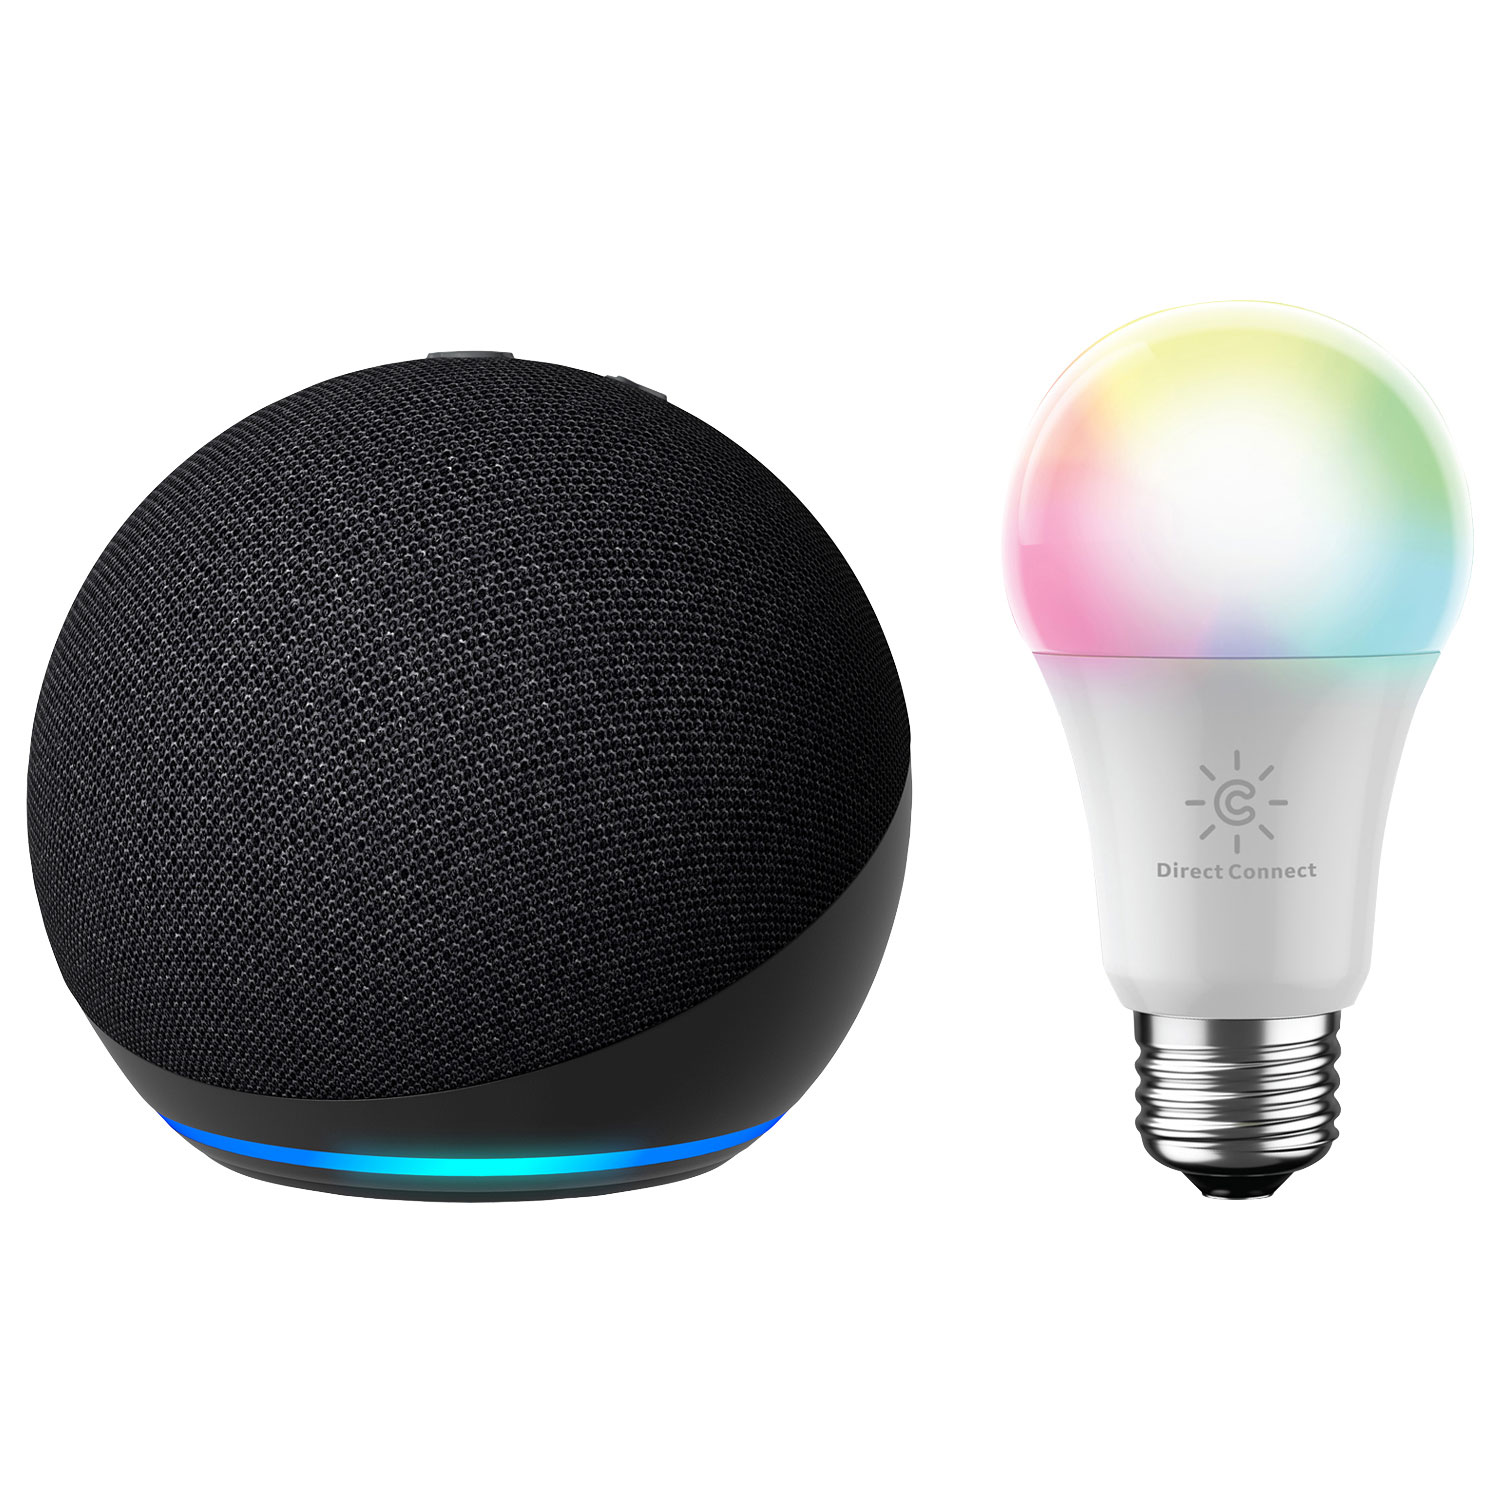 Amazon Echo Dot (5th Gen) Smart Speaker with Alexa & Cync A19 Smart LED Light Bulb - Charcoal